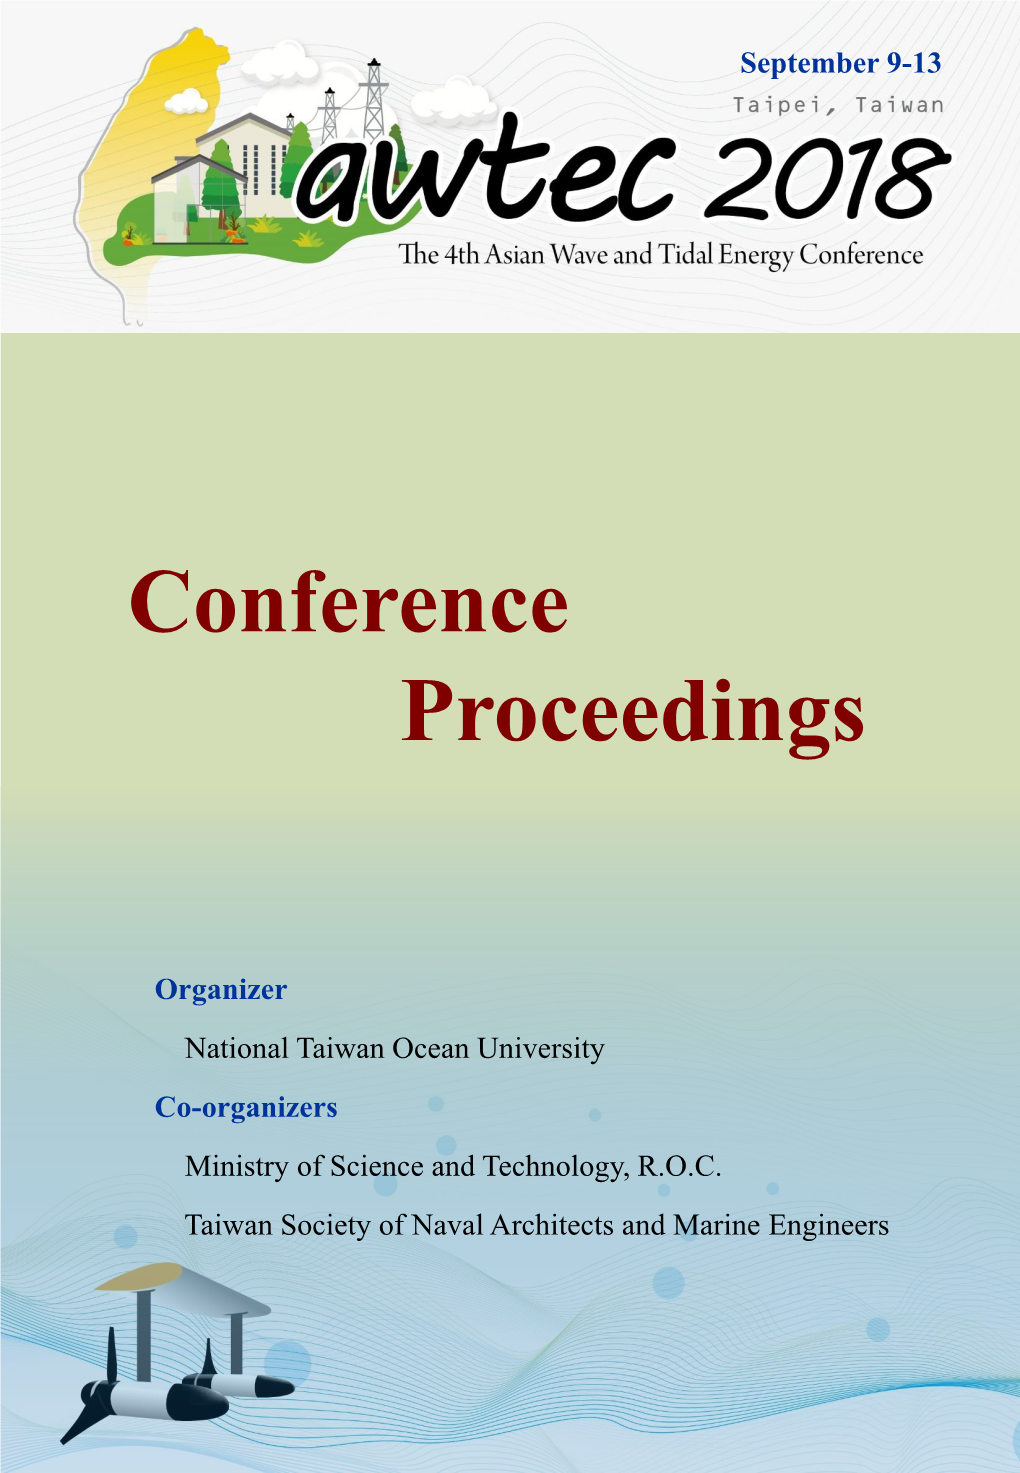 AWTEC 2018 Conference Proceedings